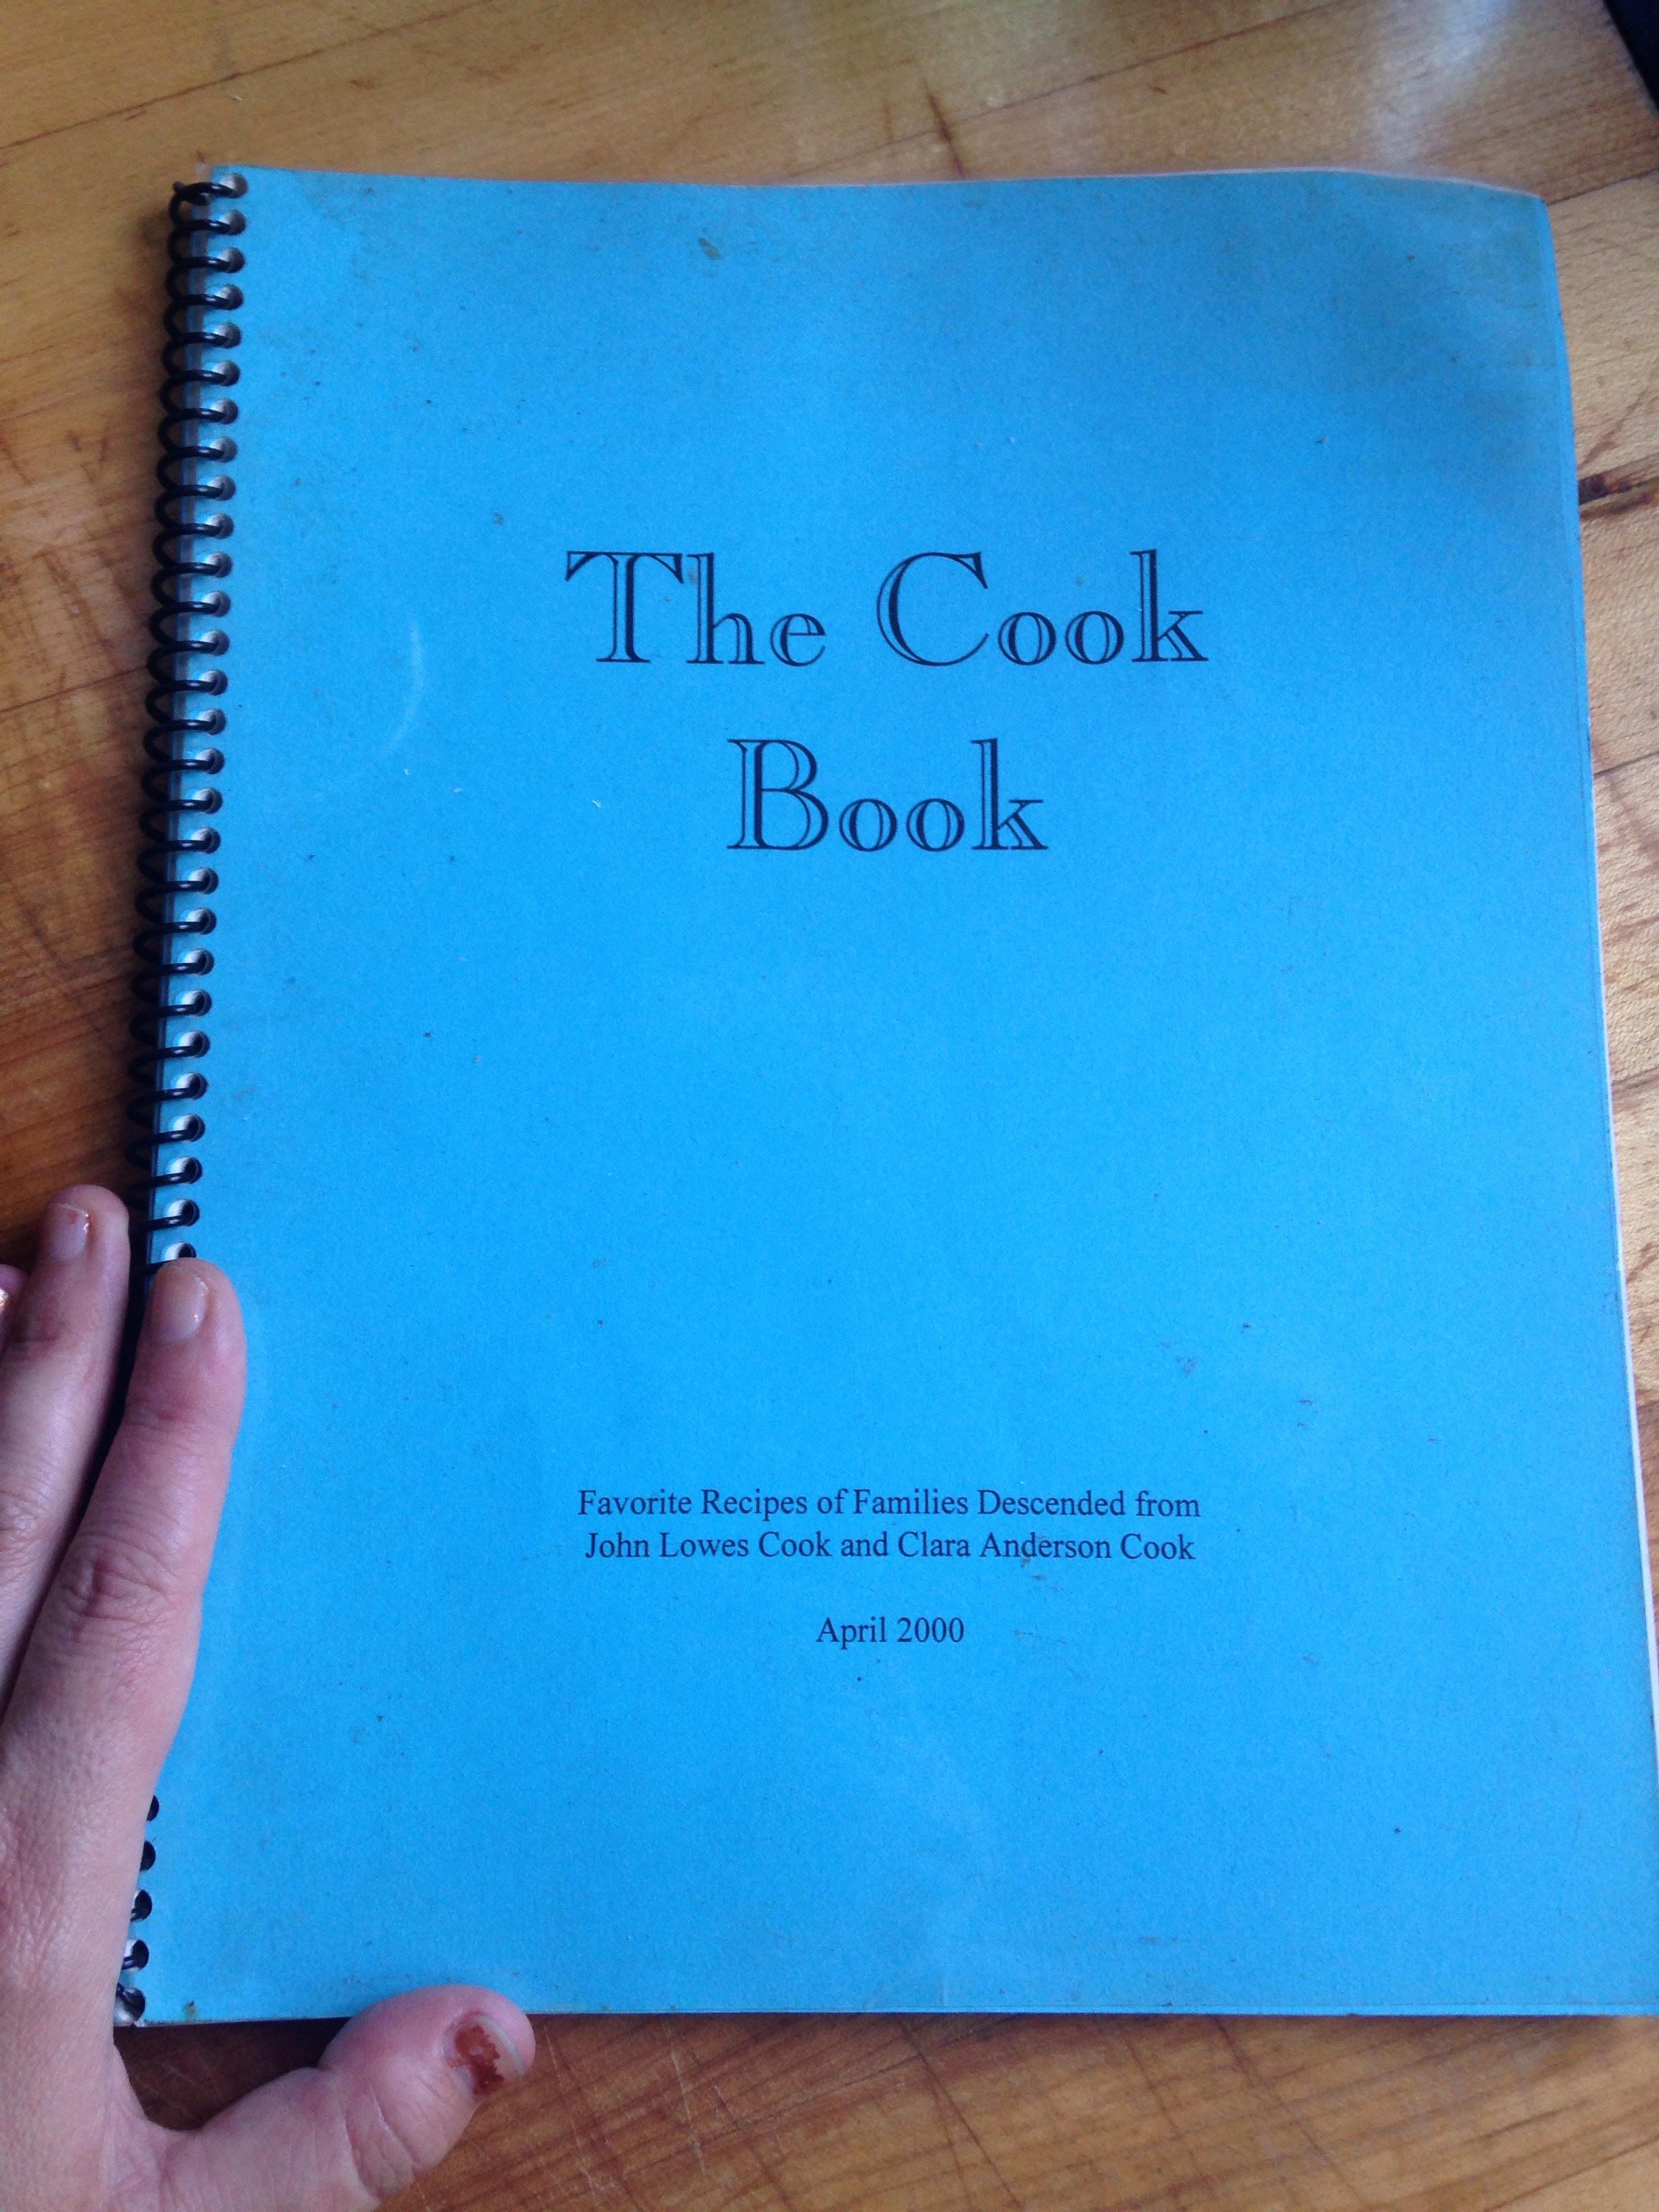 IMG: Barbara's Cookbook cover.